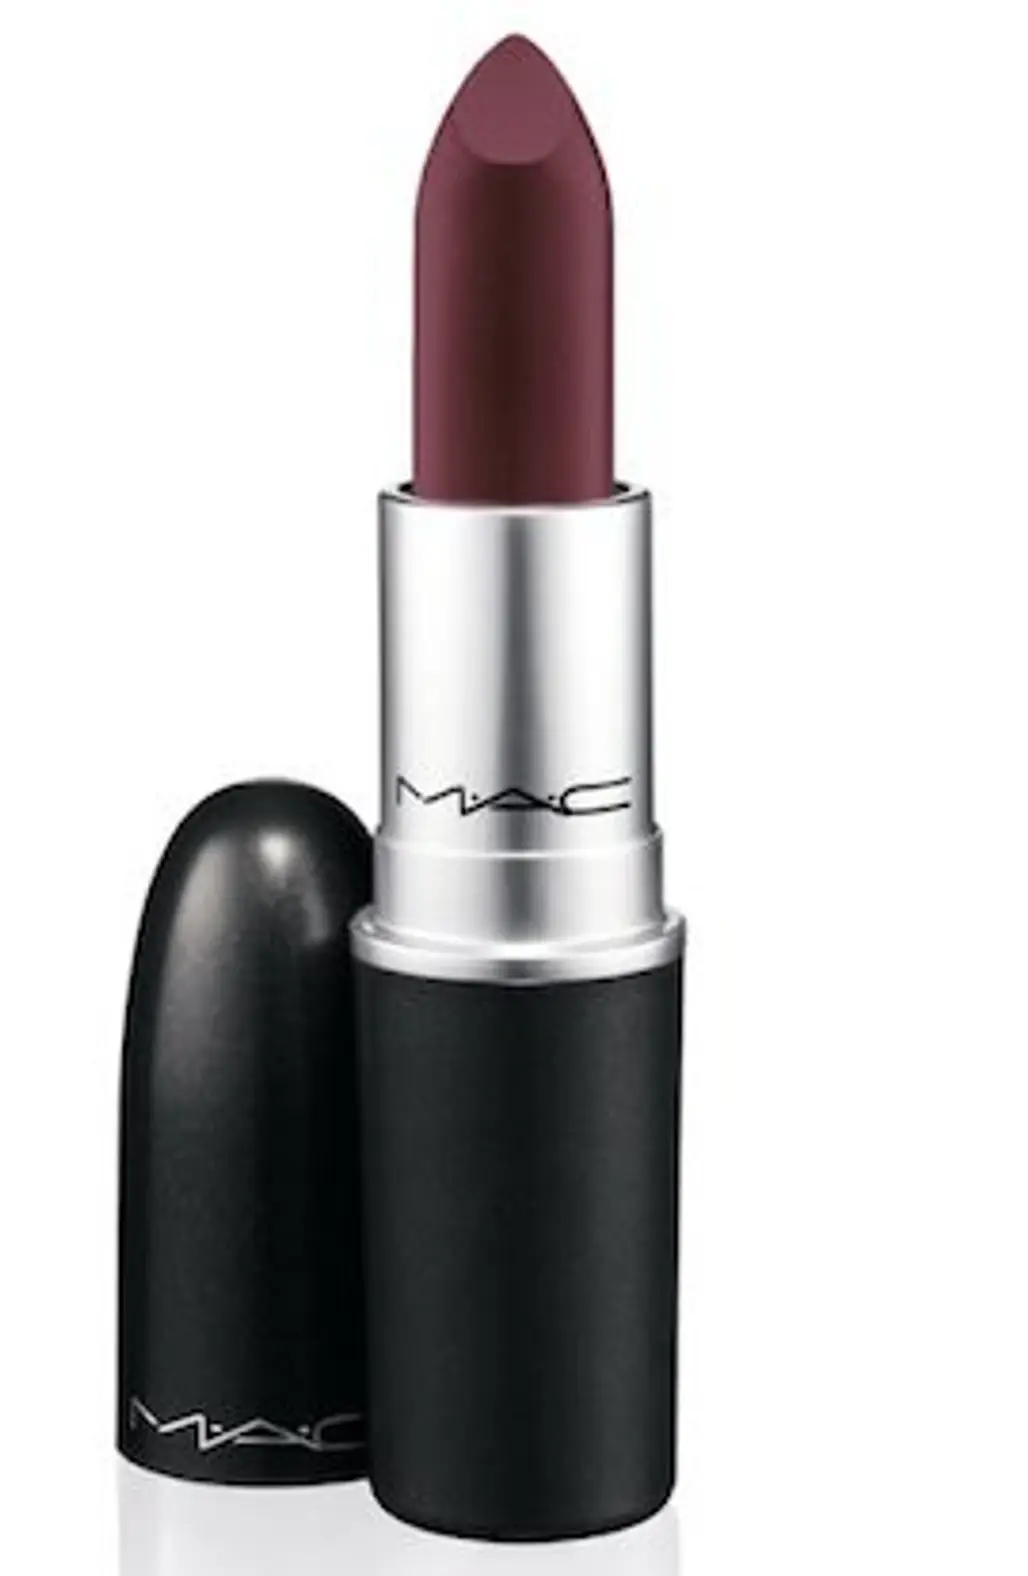 MAC Hang-up Lipstick